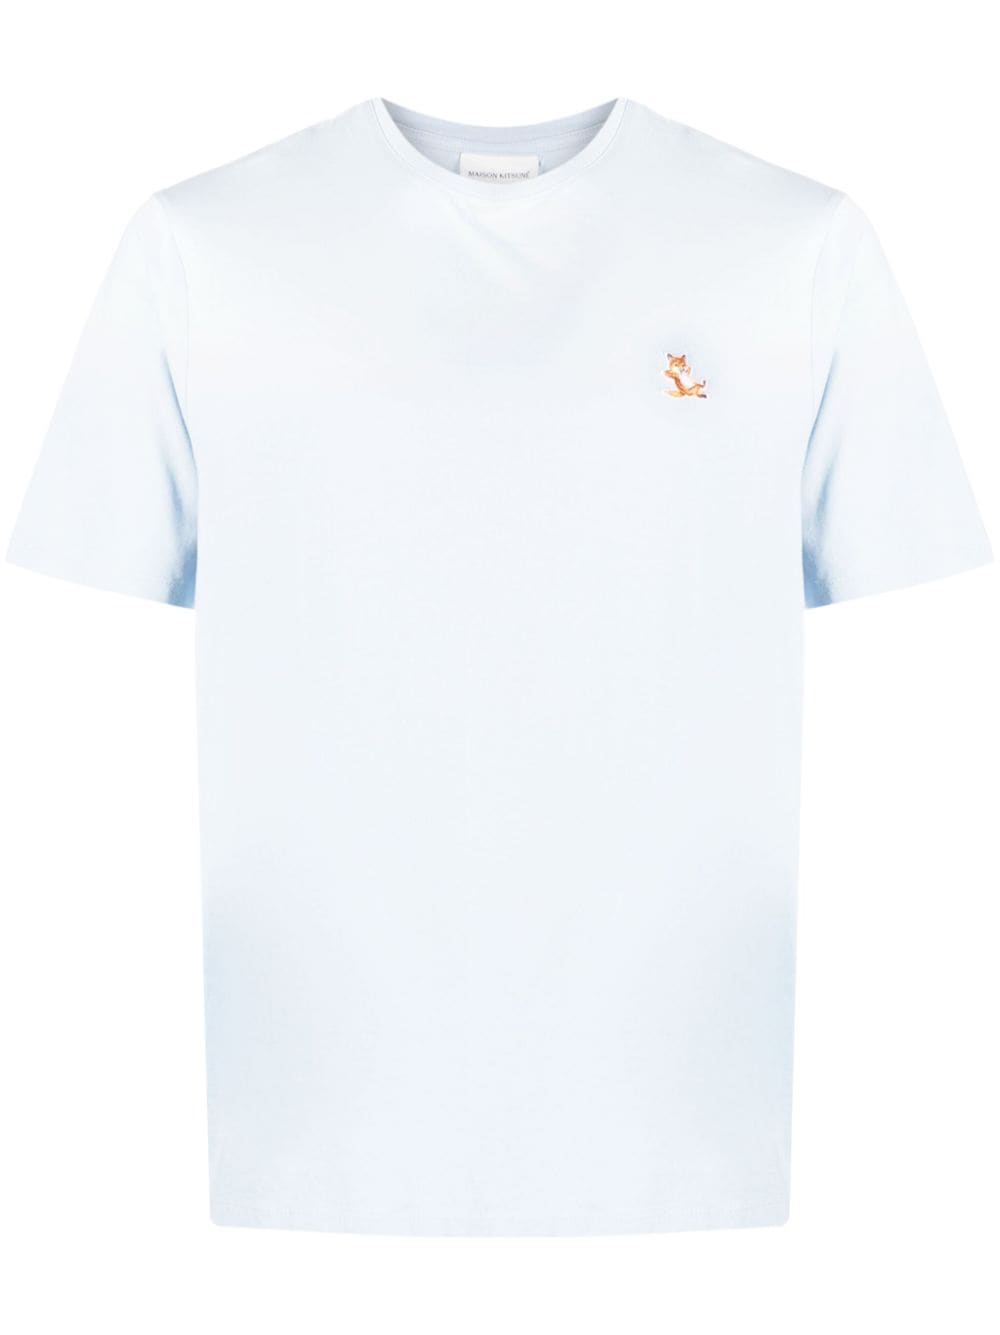 Fox-patch T-shirt